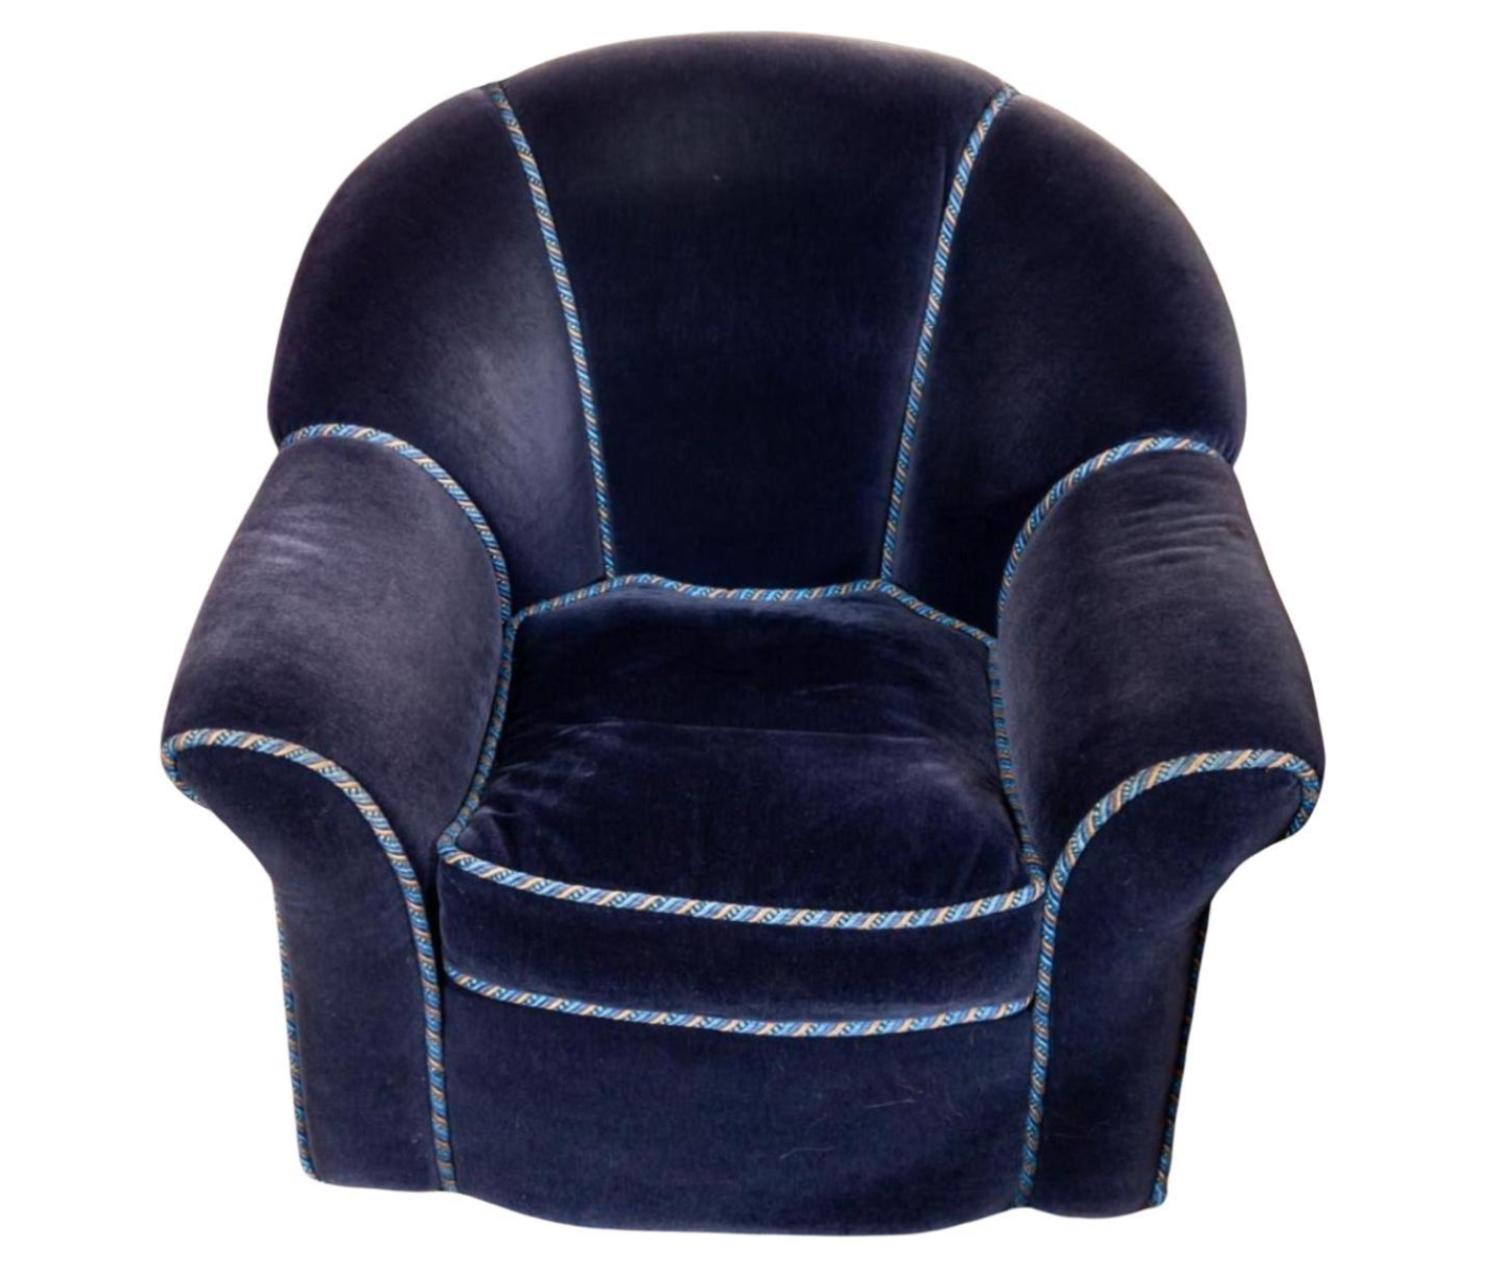 Art Deco Style Upholstering Sapphire Blue Mohair Club Chair (amerikanisch)